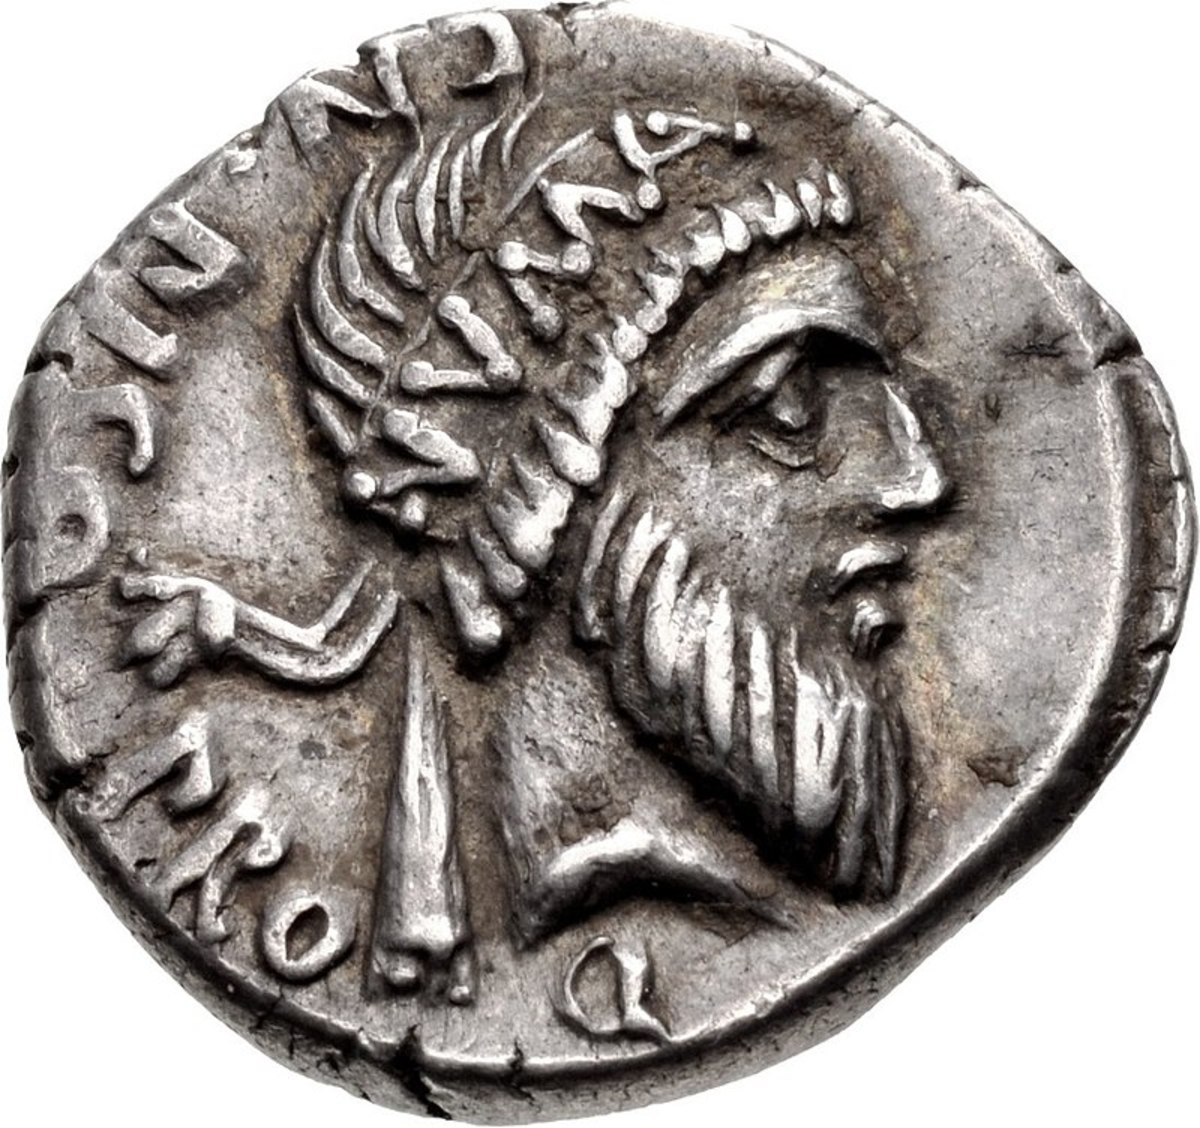 Image of Numa Pompilius on a Roman 48 BC silver denarius coin.